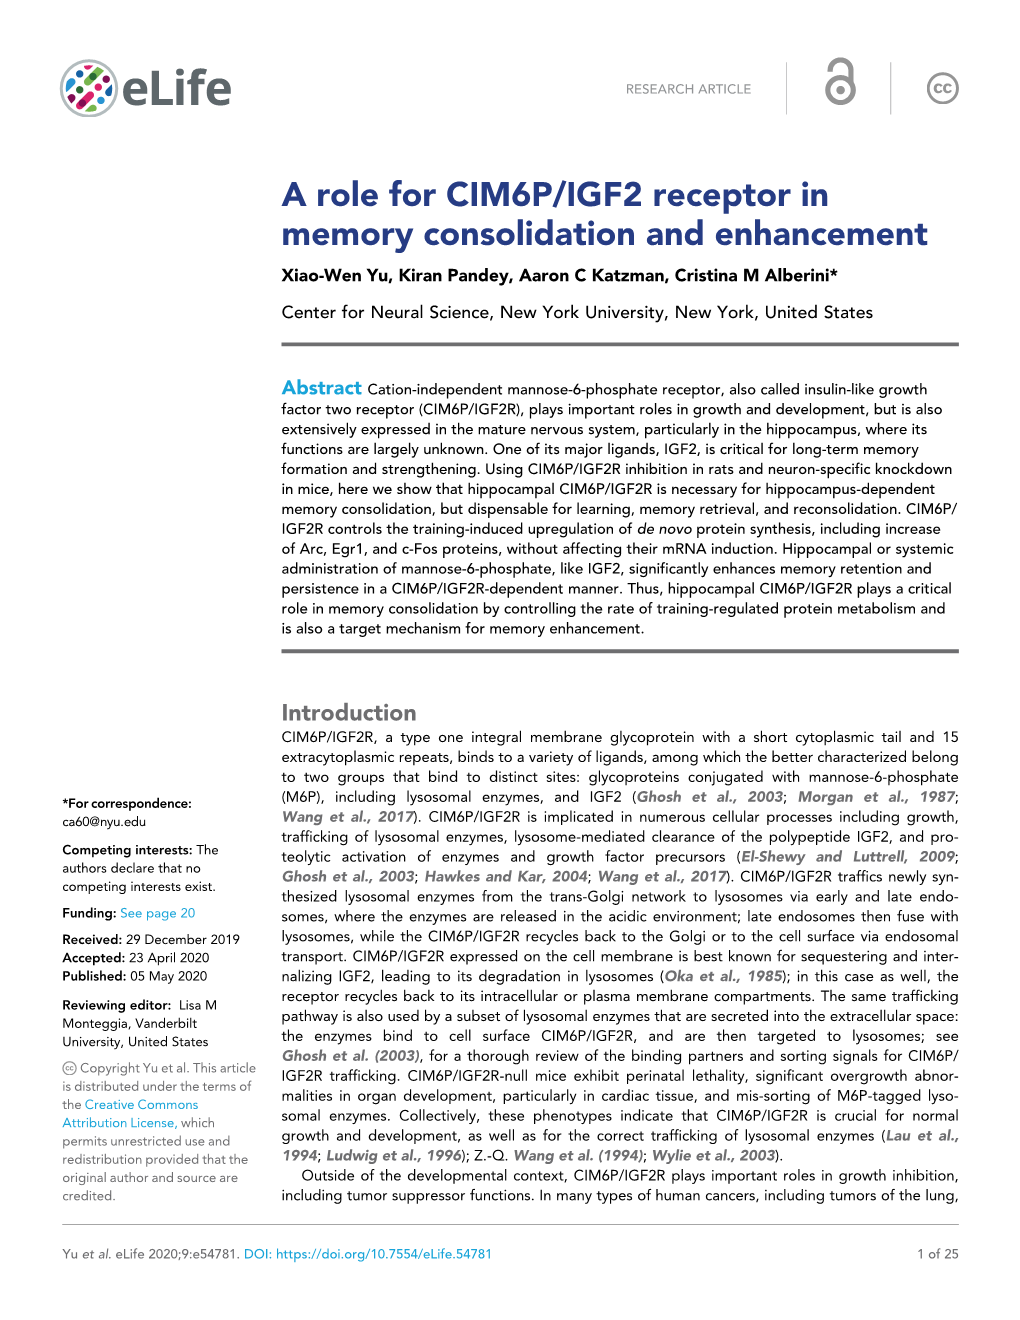 A Role for CIM6P/IGF2 Receptor in Memory Consolidation and Enhancement Xiao-Wen Yu, Kiran Pandey, Aaron C Katzman, Cristina M Alberini*